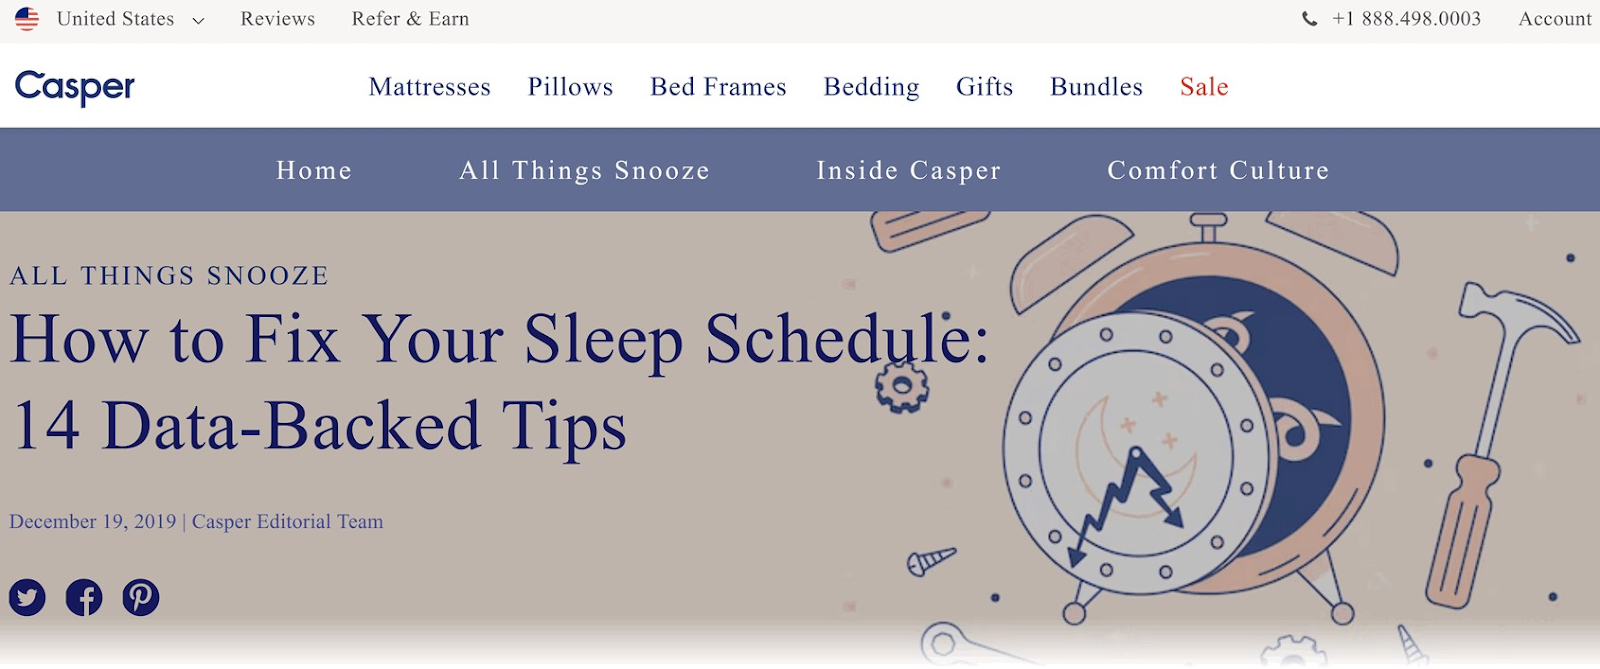 Casper’s guide on “how to fix your sleep schedule”